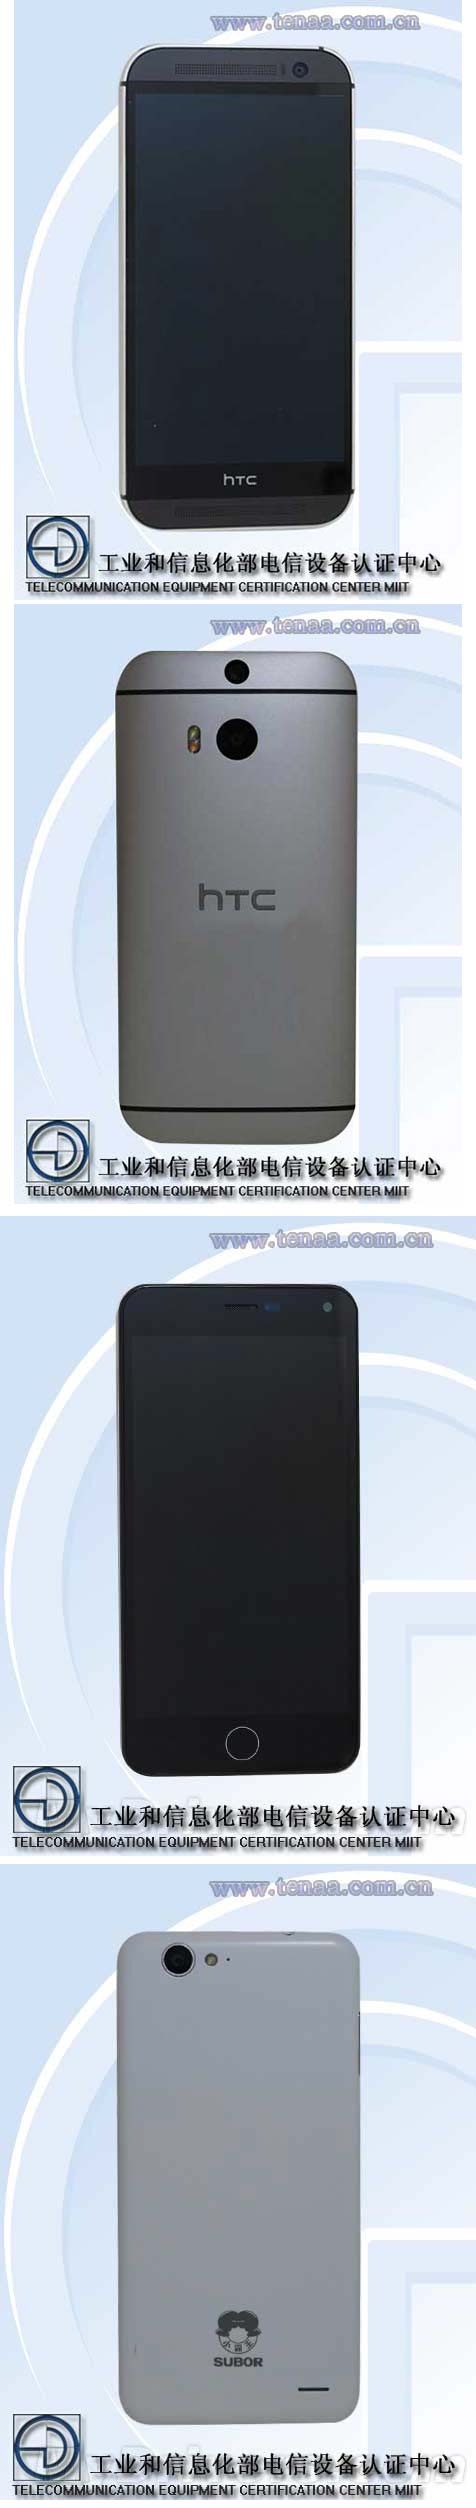 На фото показаны аппараты HTC One (M8) Eye и Subor X7